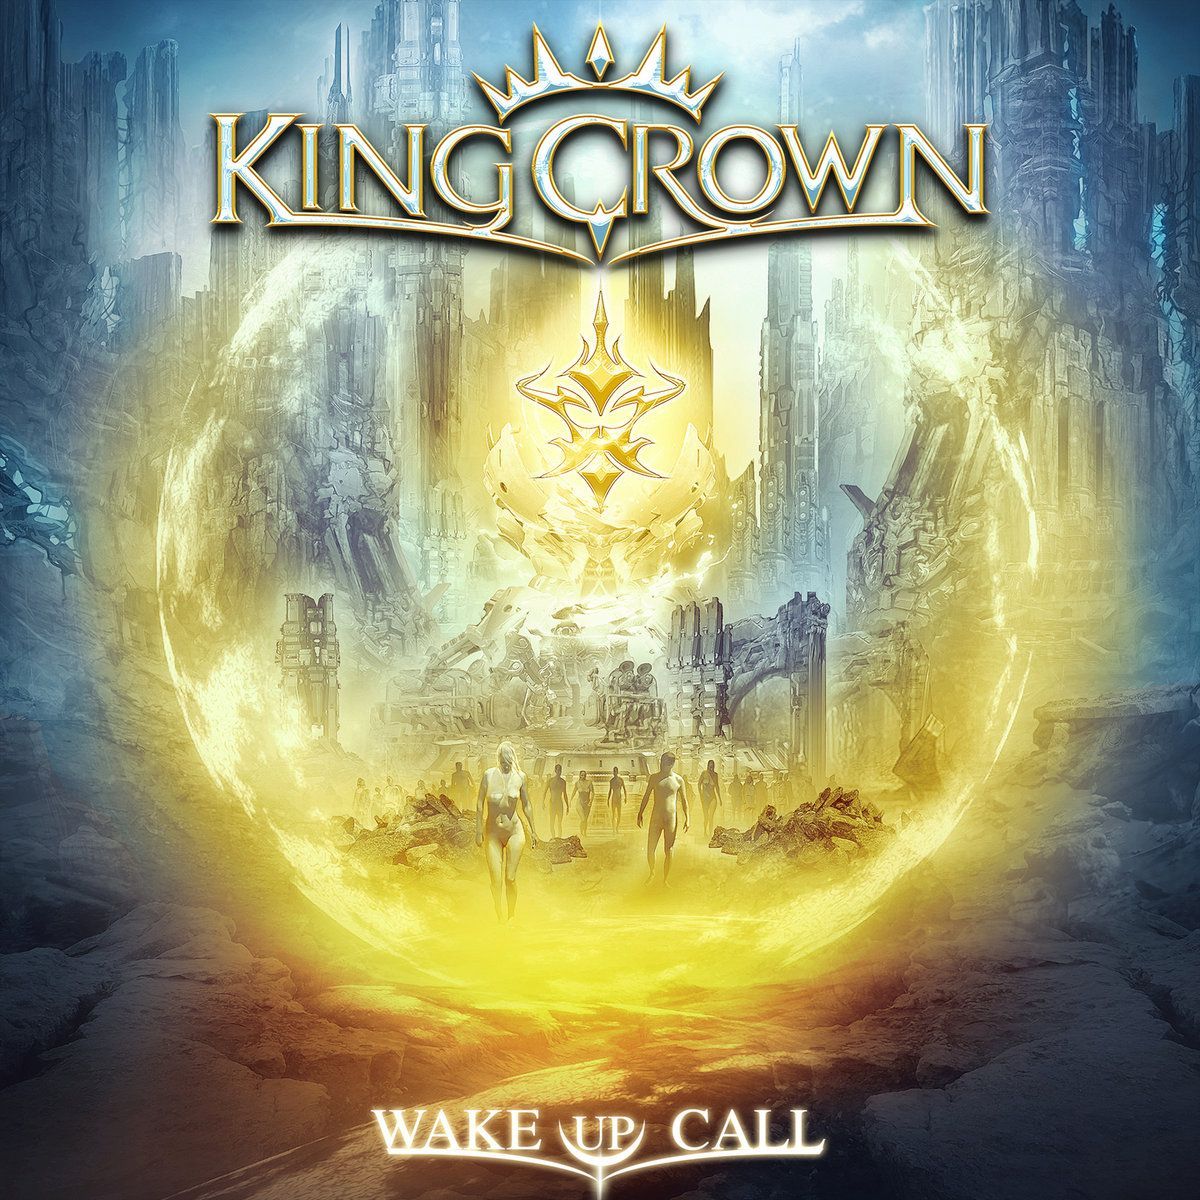 Kingcrown - A New Dawn (lyric video)